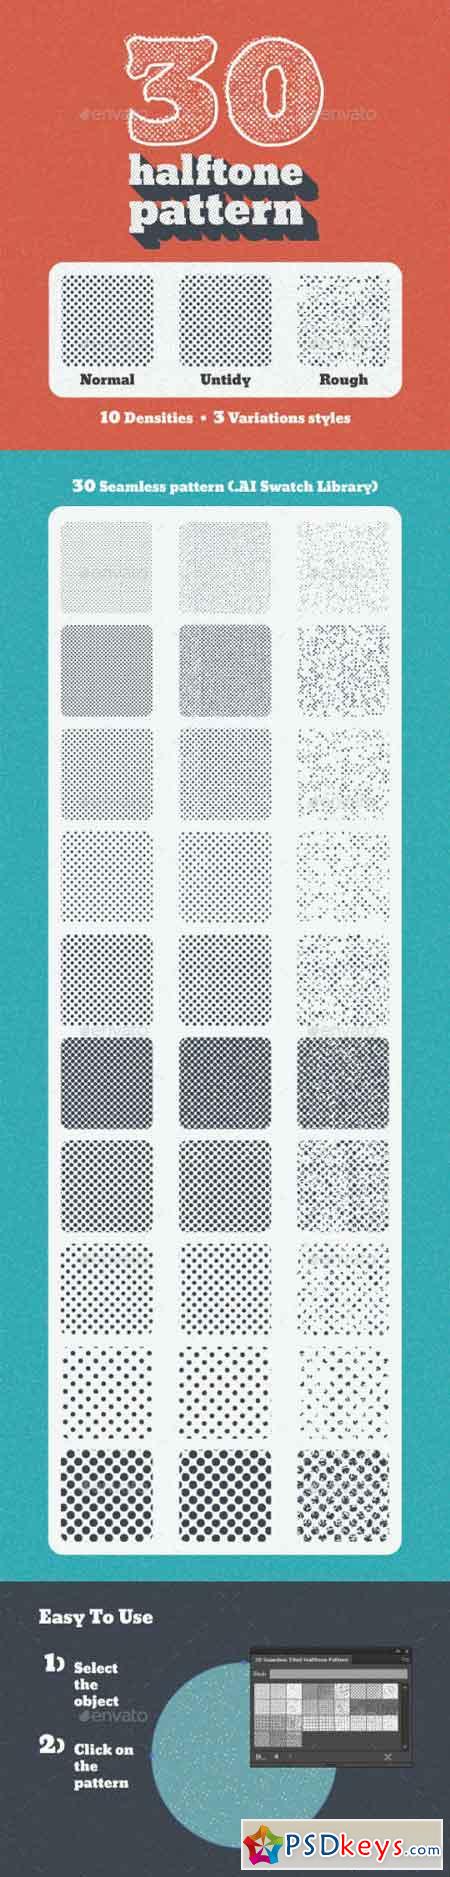 30 Seamless Tiled Halftone Patterns 12089574